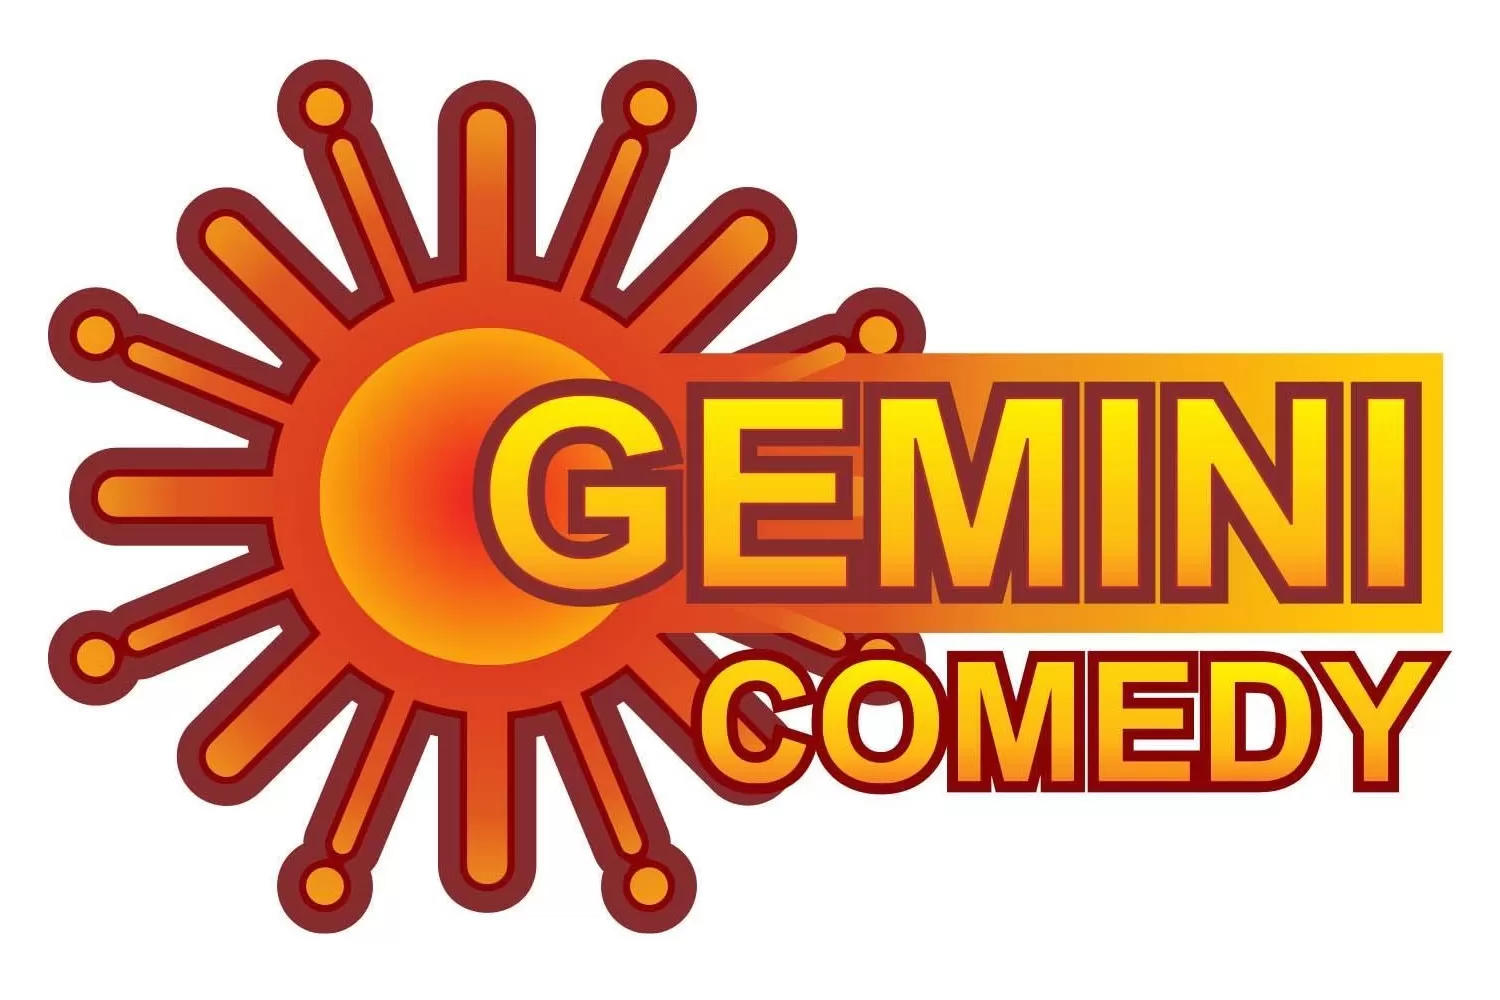 Television Media Gemini Comedy Advertising in India